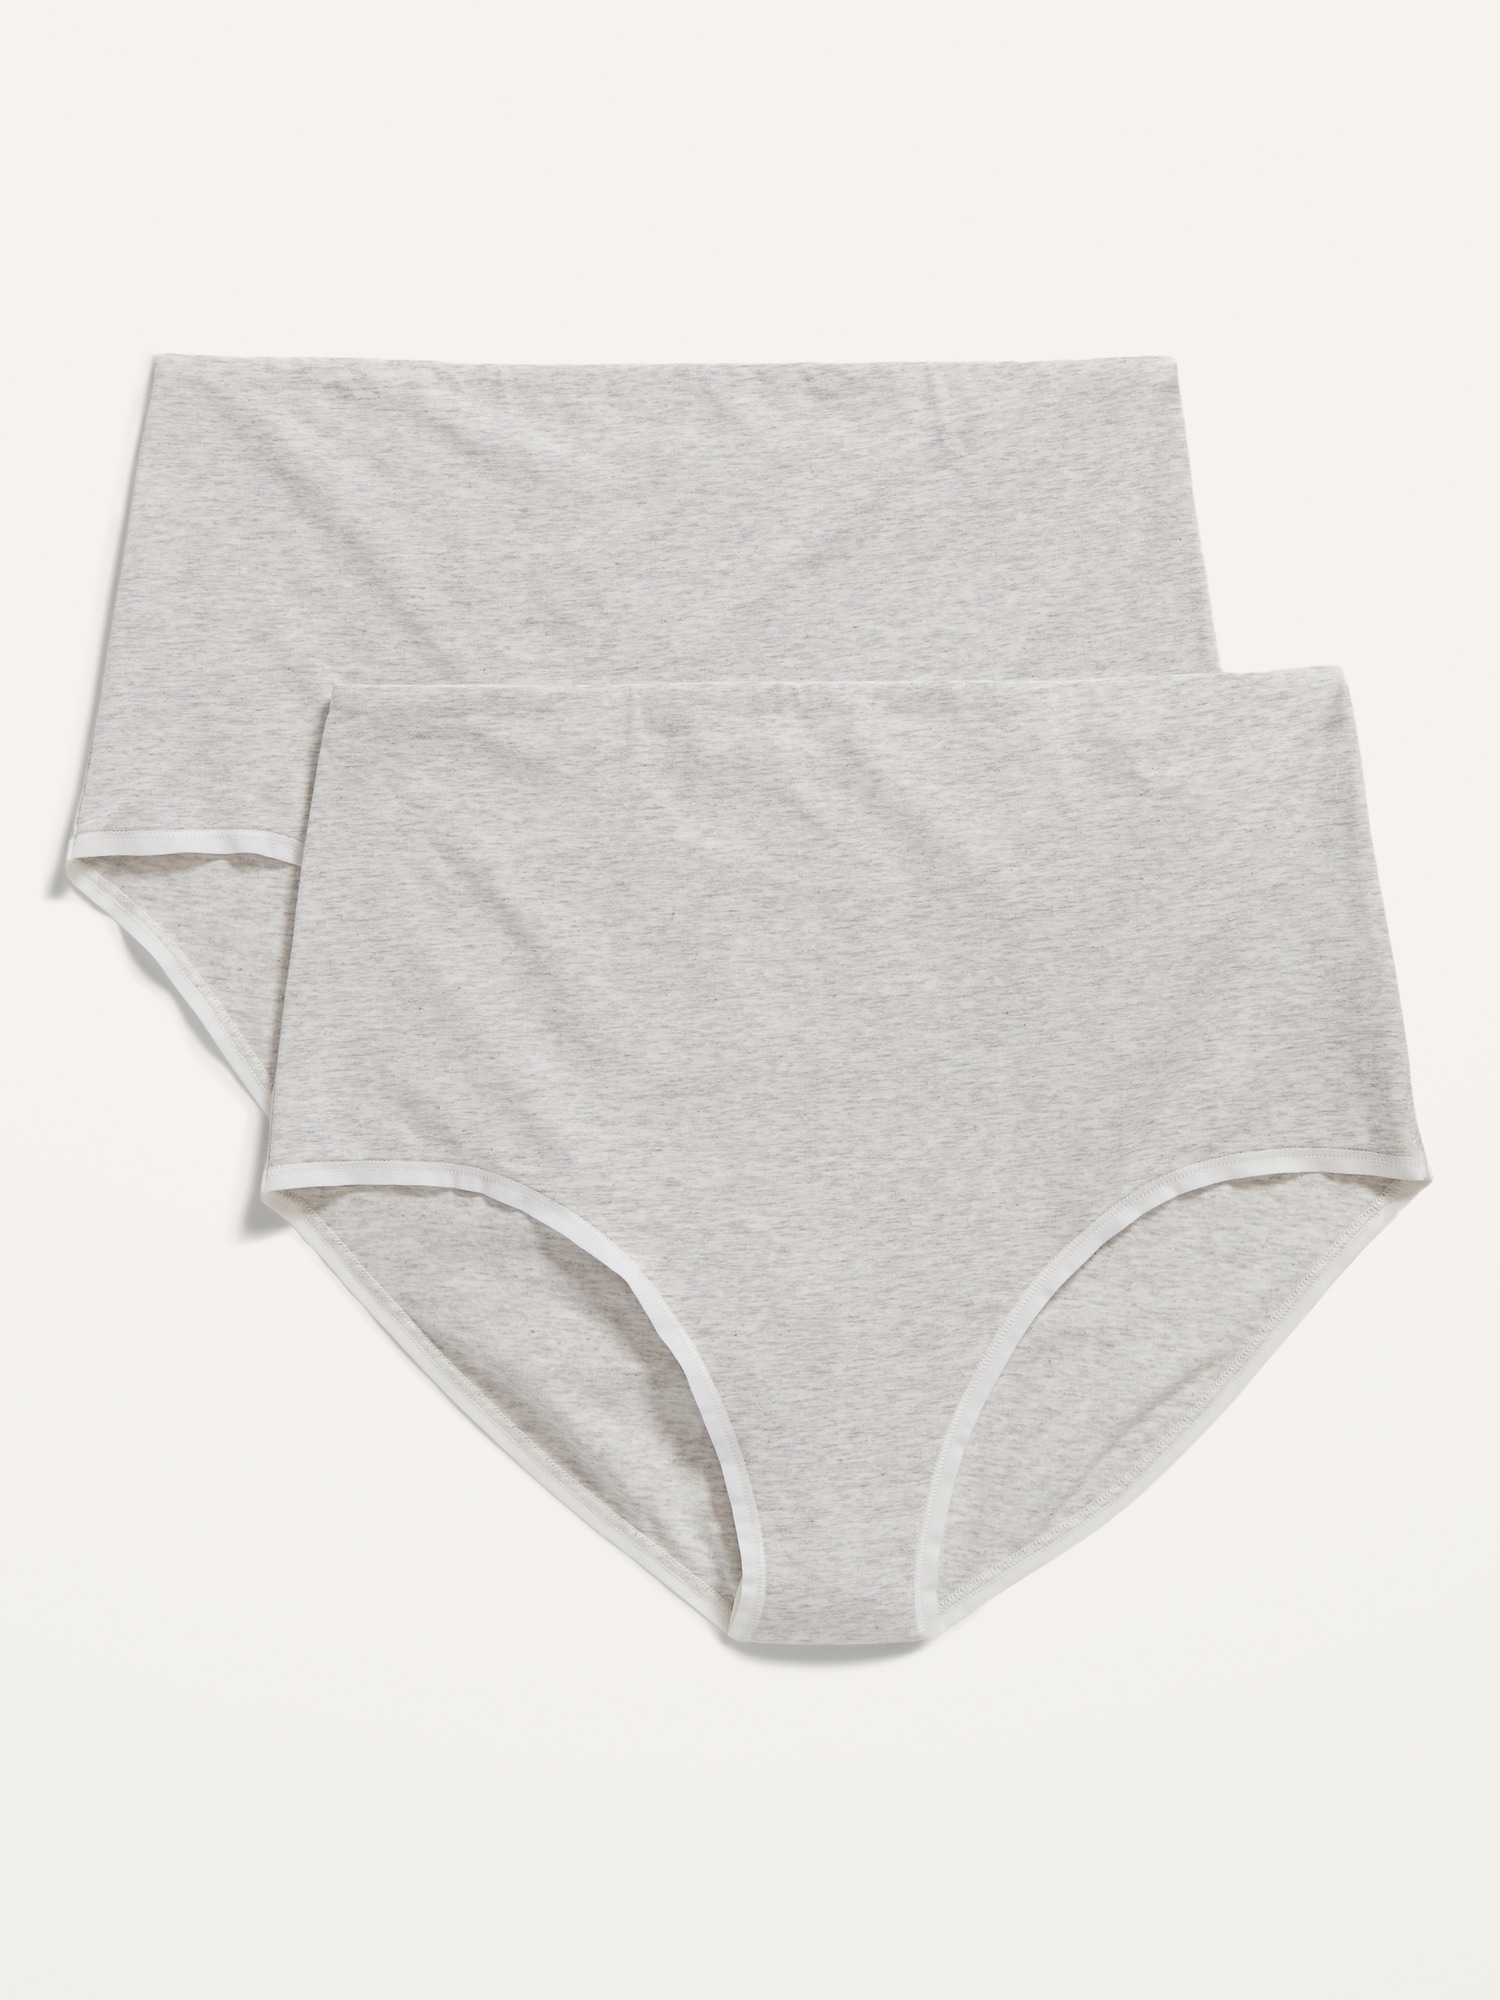 Baby Bump Underwear - Maternity Lingerie